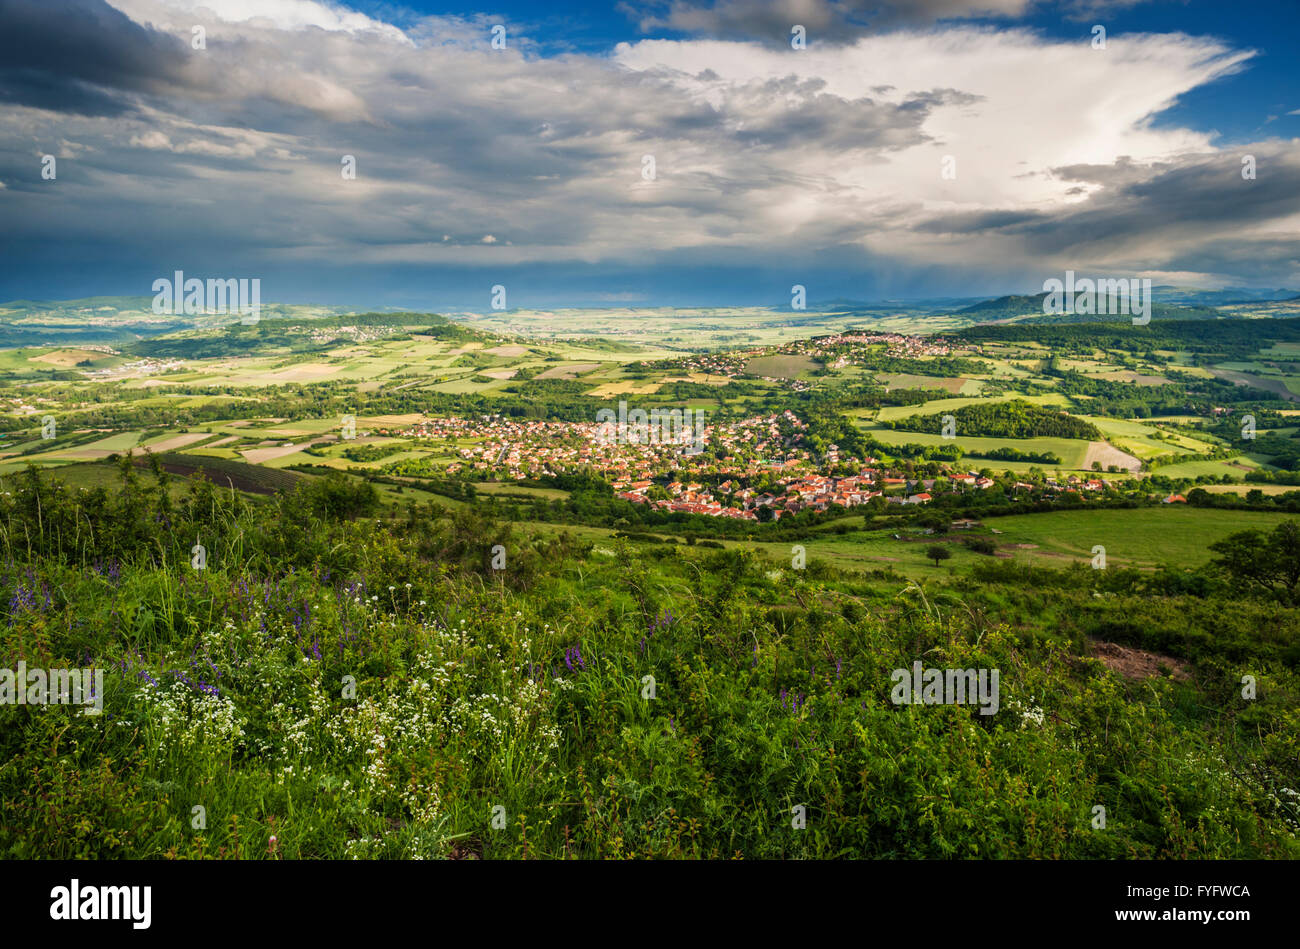 View southwards in June from Plateau de Gergovie, Puy-de-Dome, Auvergne, France Stock Photo